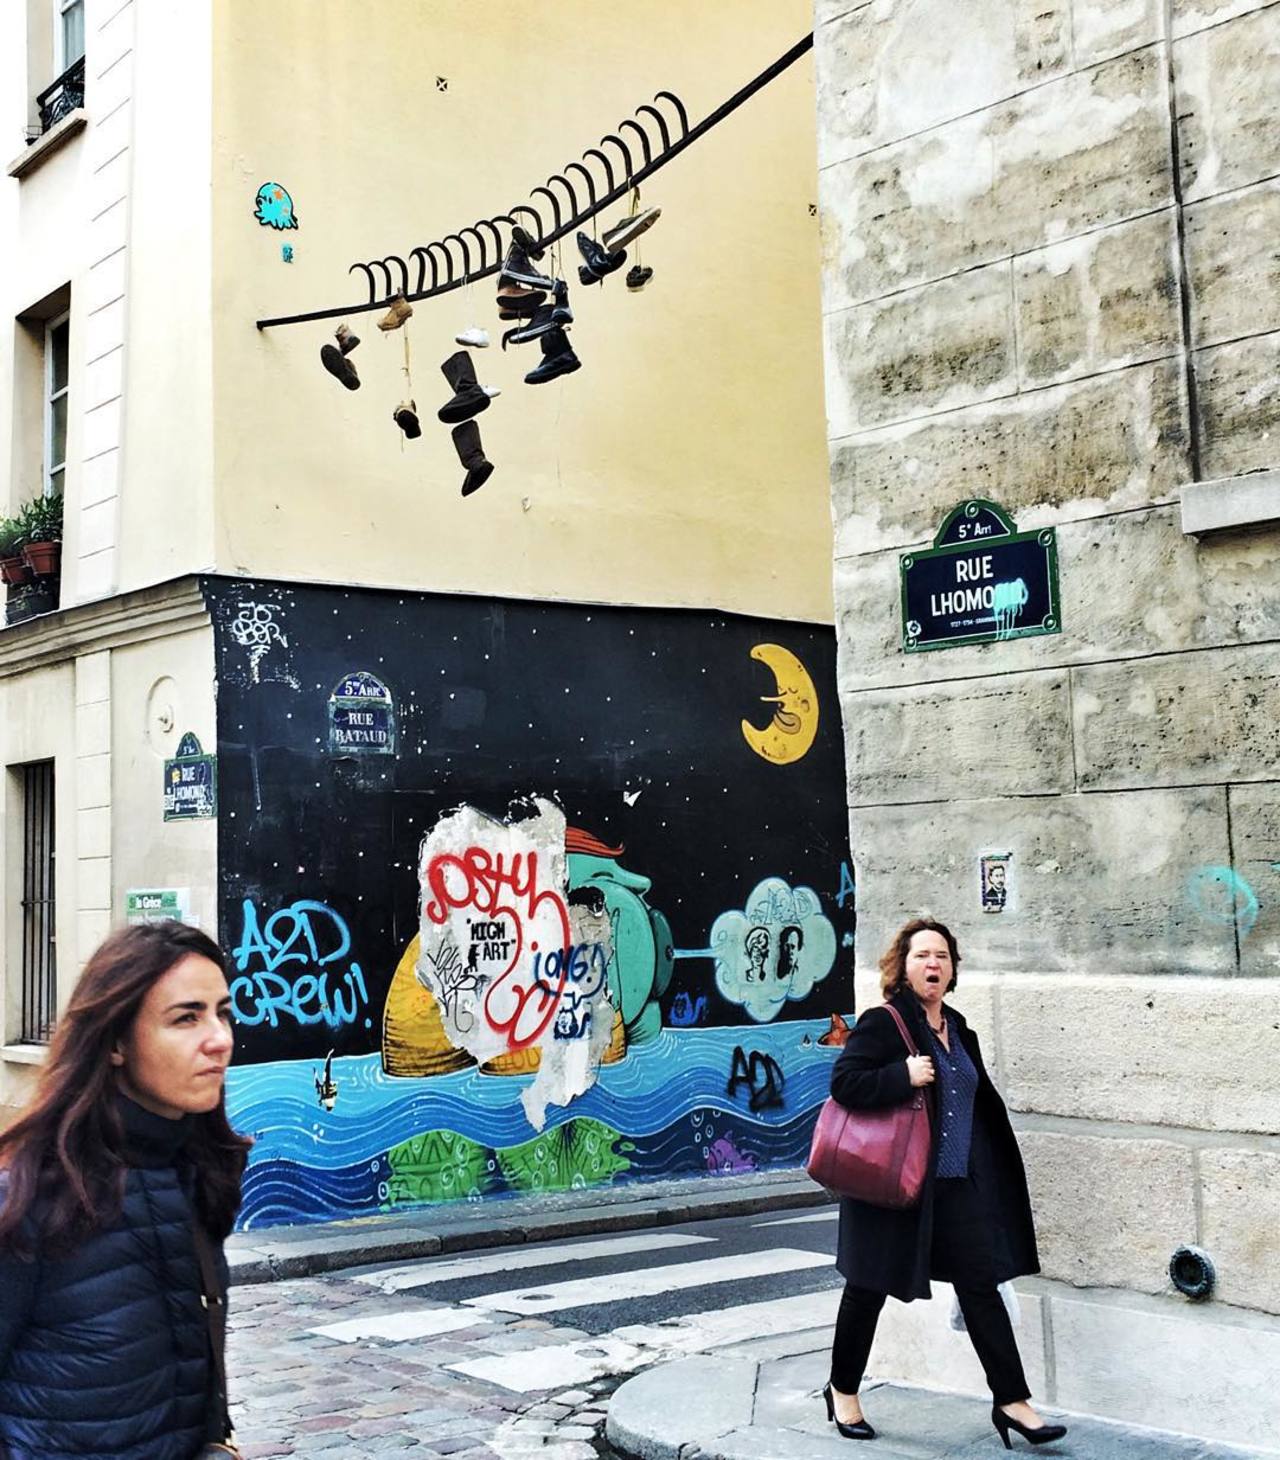 #Paris #graffiti photo by @jenniferderyweddings http://ift.tt/1GAx1uZ #StreetArt https://t.co/oiRo7T78kA